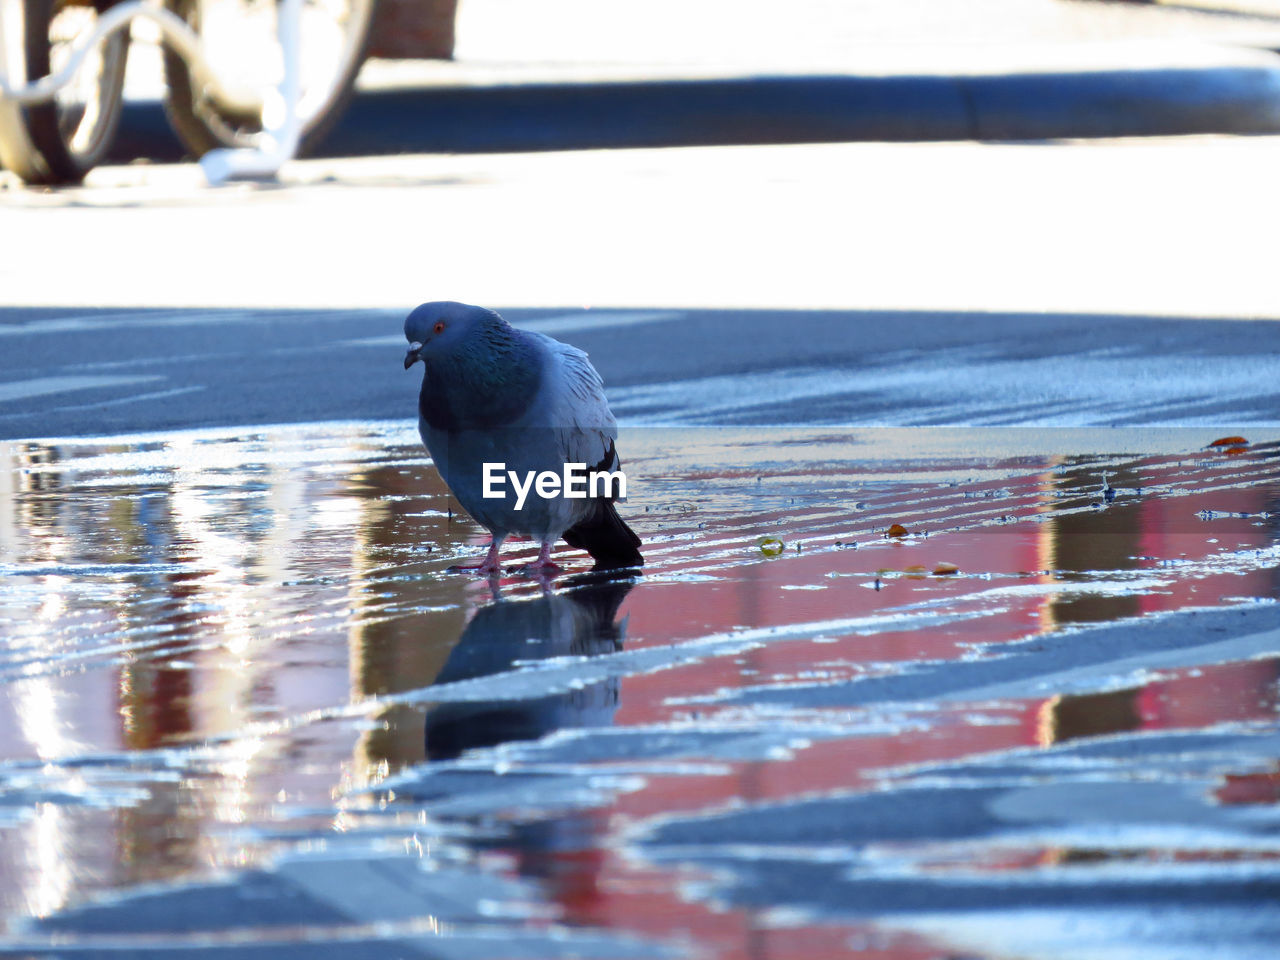 Pigeon on wet street